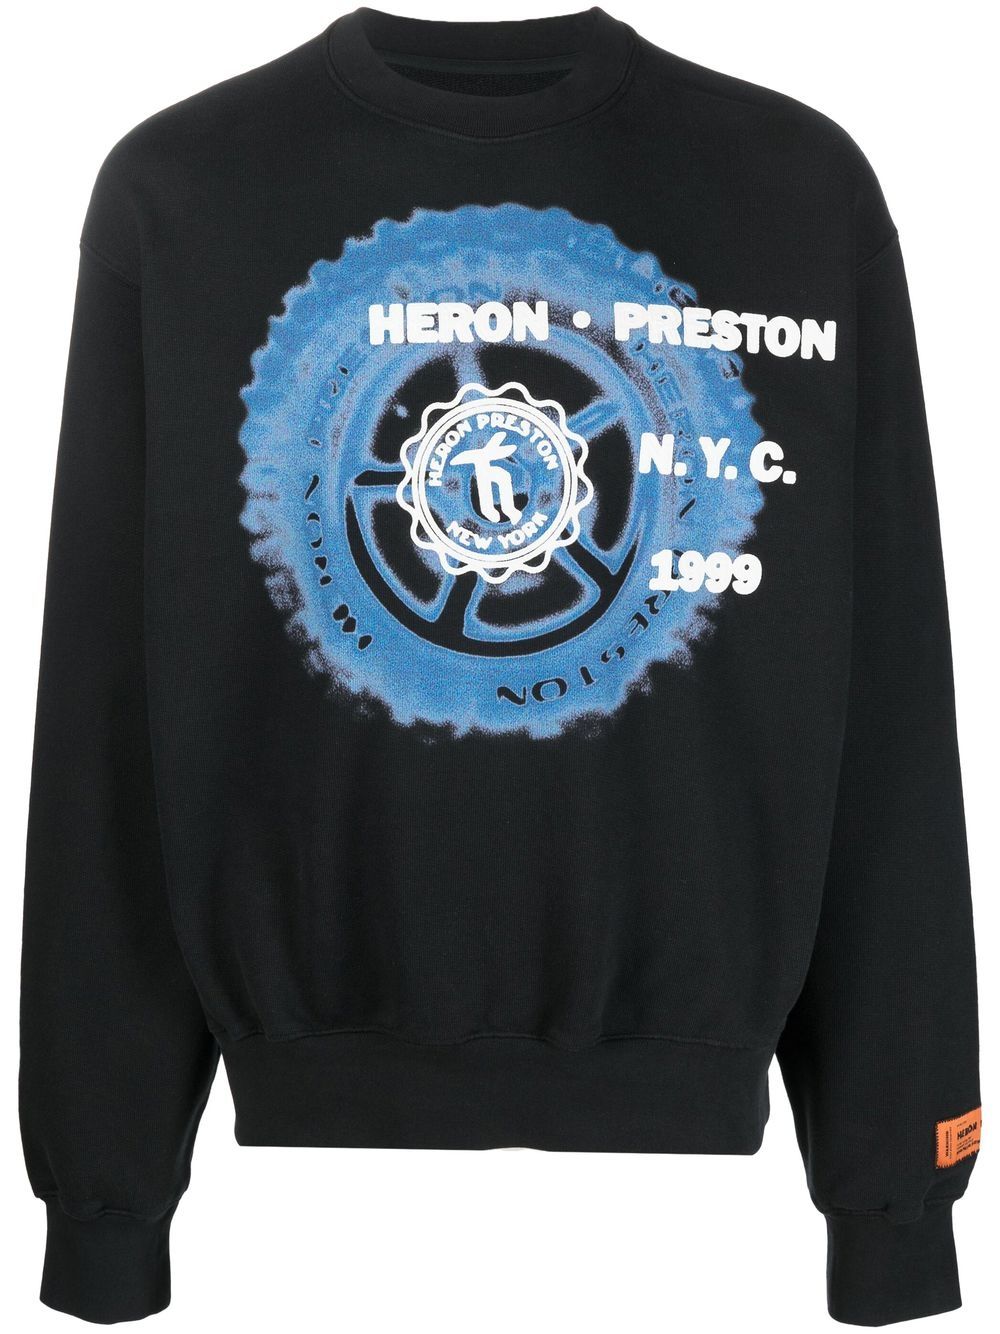 Heron Preston off road print sweatshirt - Black von Heron Preston